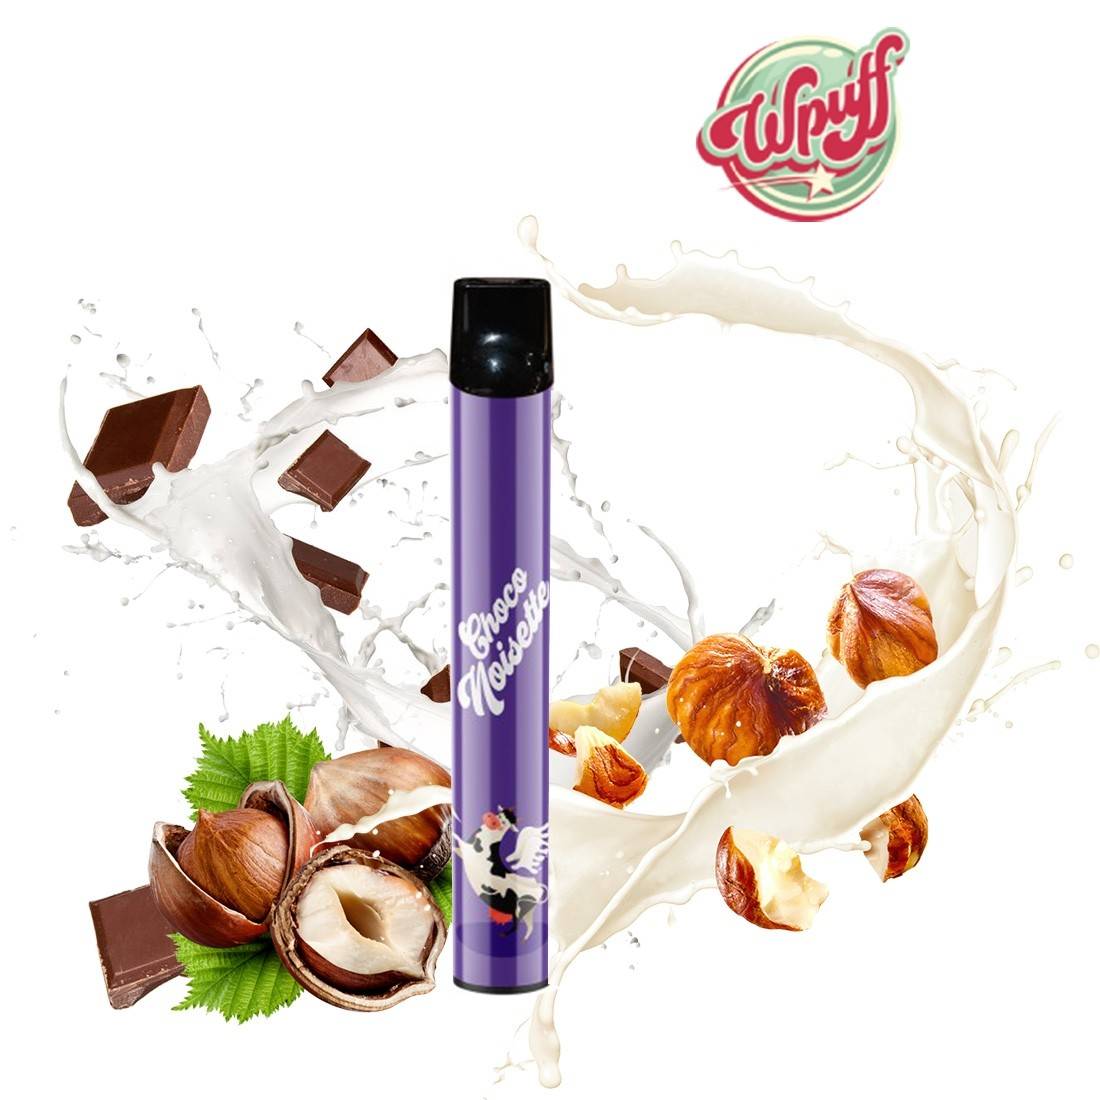 Feuilles blunt aLeda Chocolat - Disponible chez S Factory !